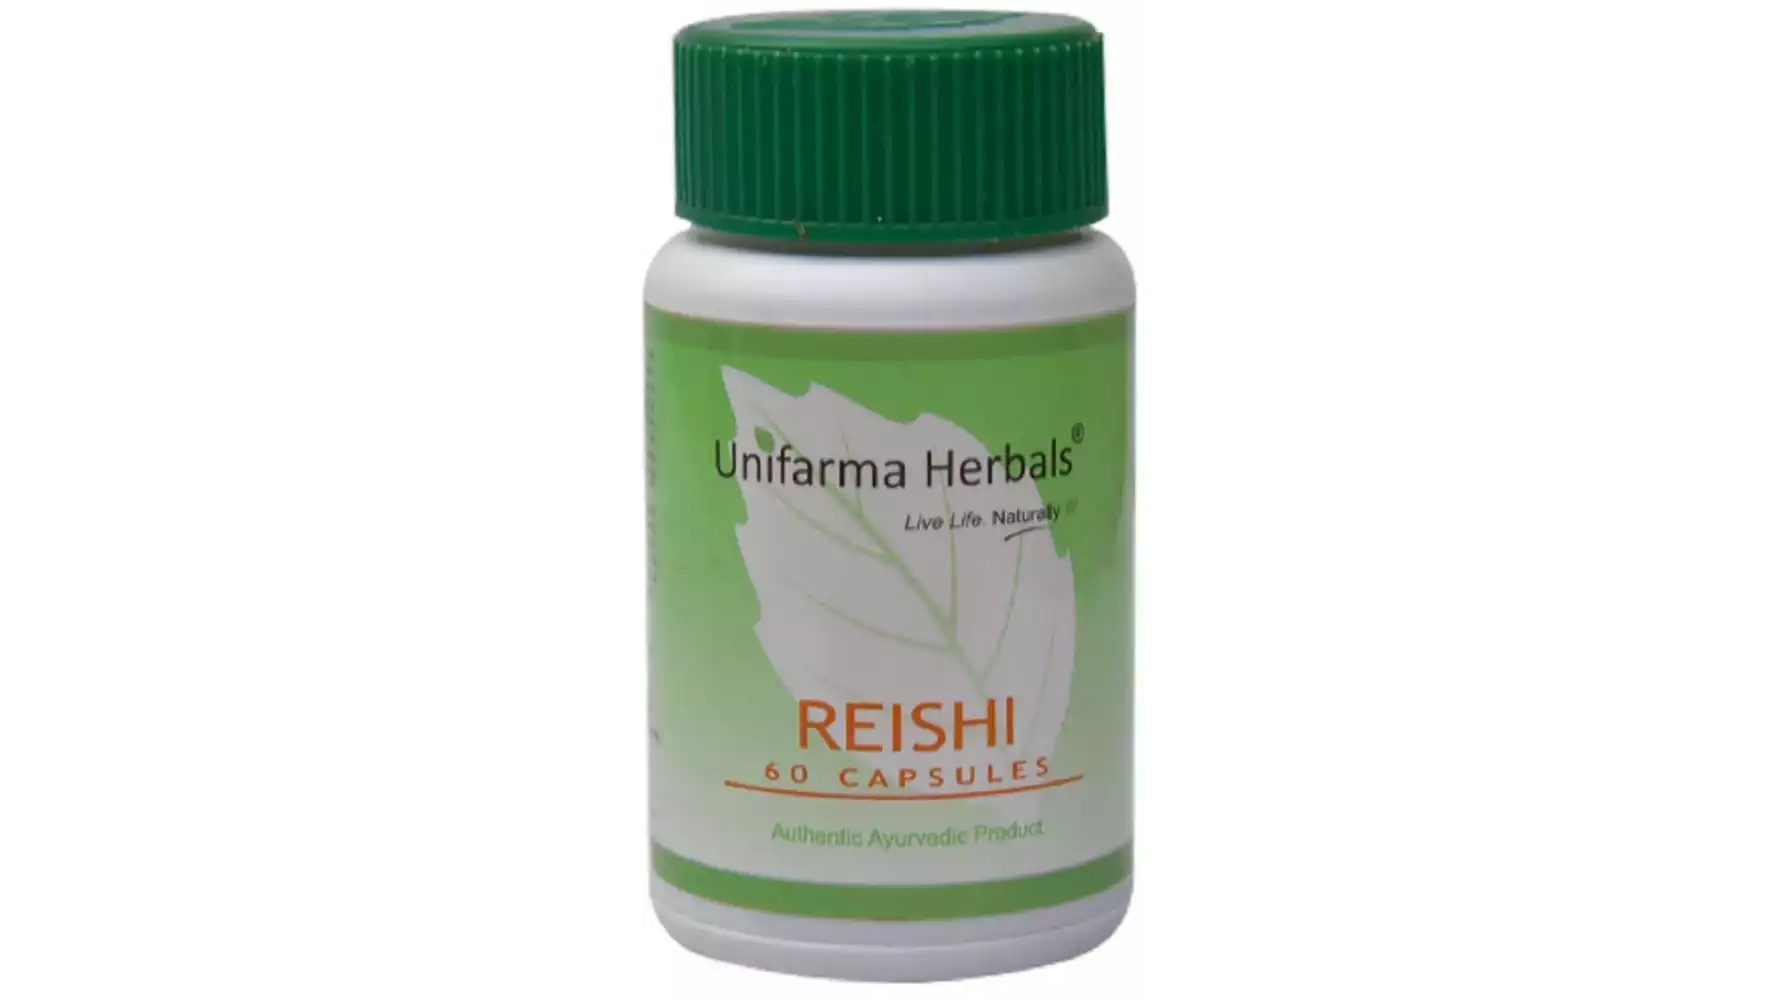 Unifarma Herbals Reishi (60caps)